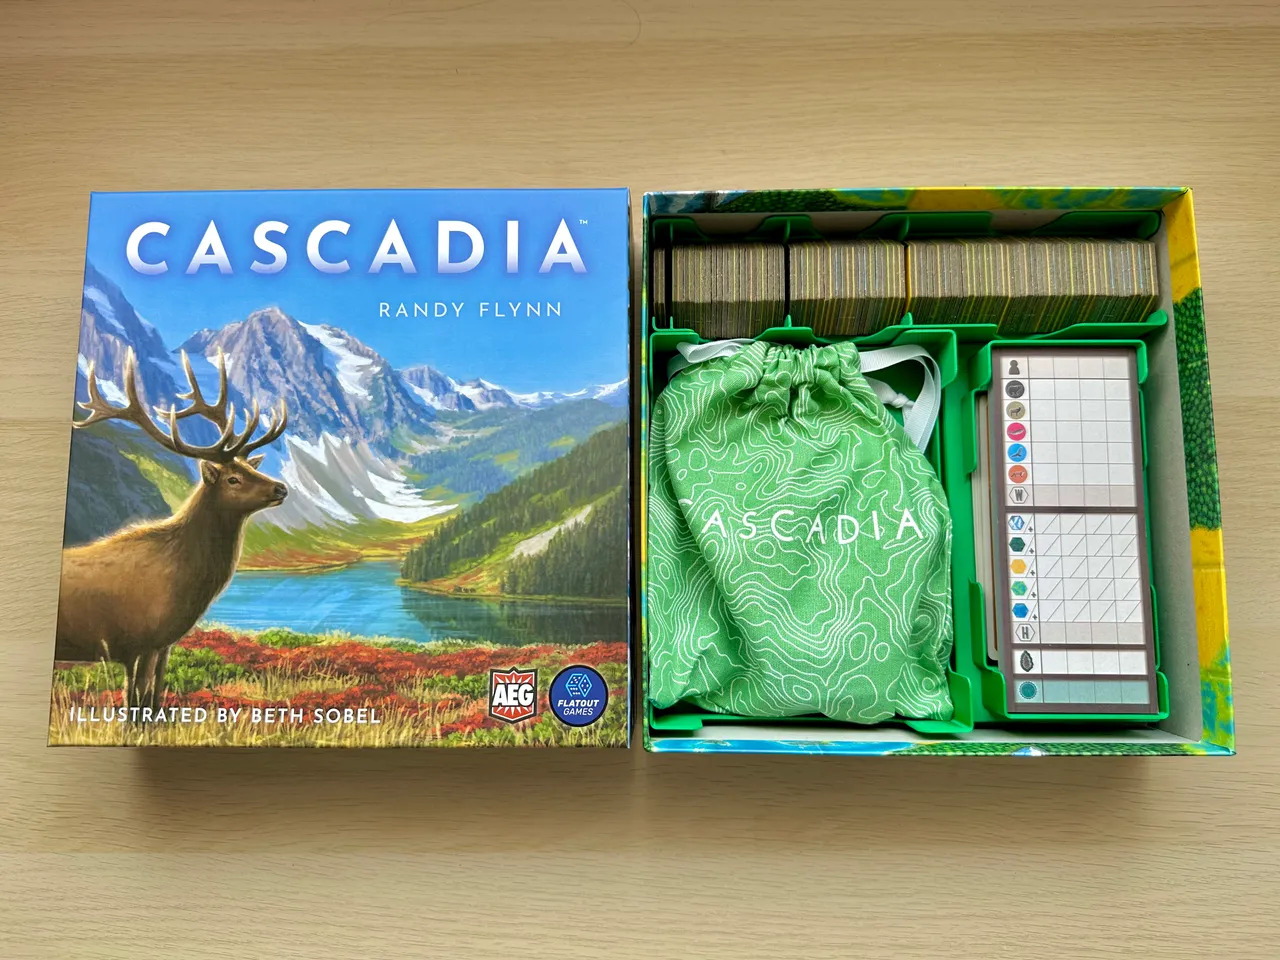 Cascadia by FLATOUT GAMES — Kickstarter